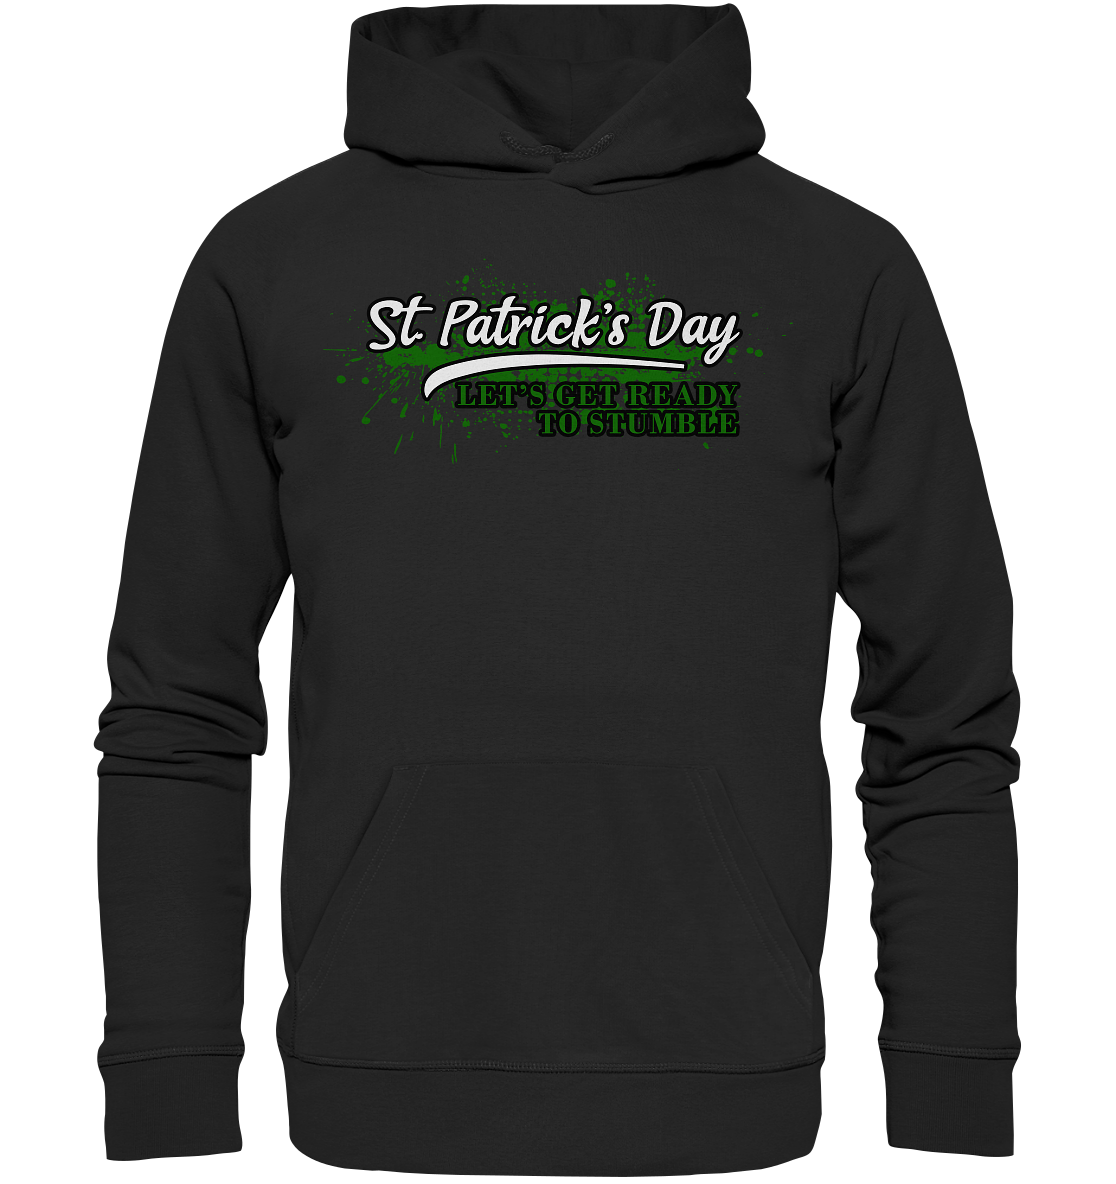 St. Patrick's Day "Let's Get Ready To Stumble" - Premium Unisex Hoodie